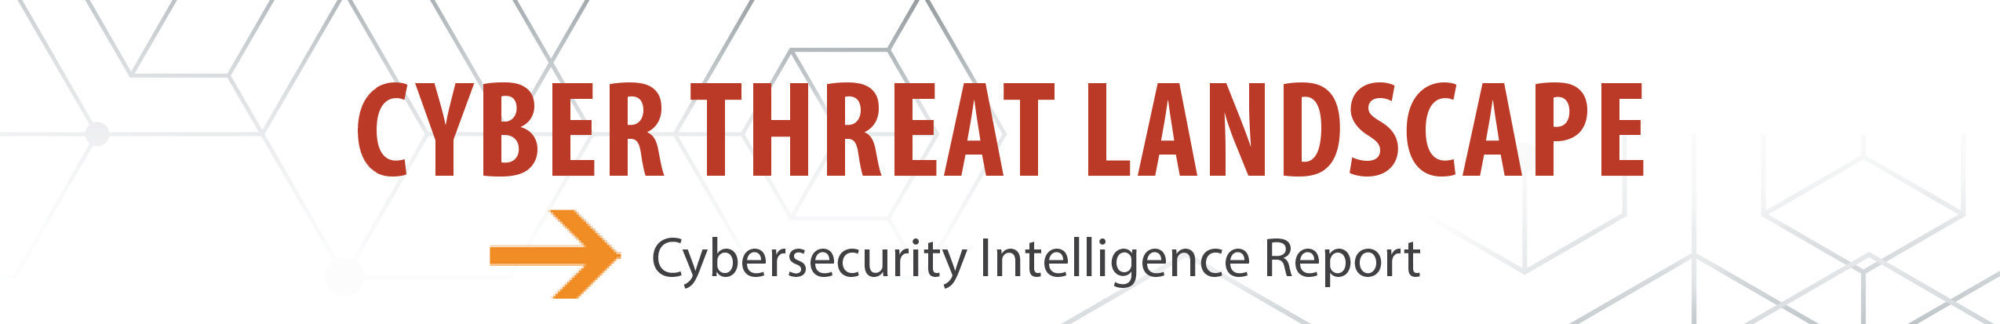 Cyber Threat Landscape -> Cybersecurity Intelligence Report header